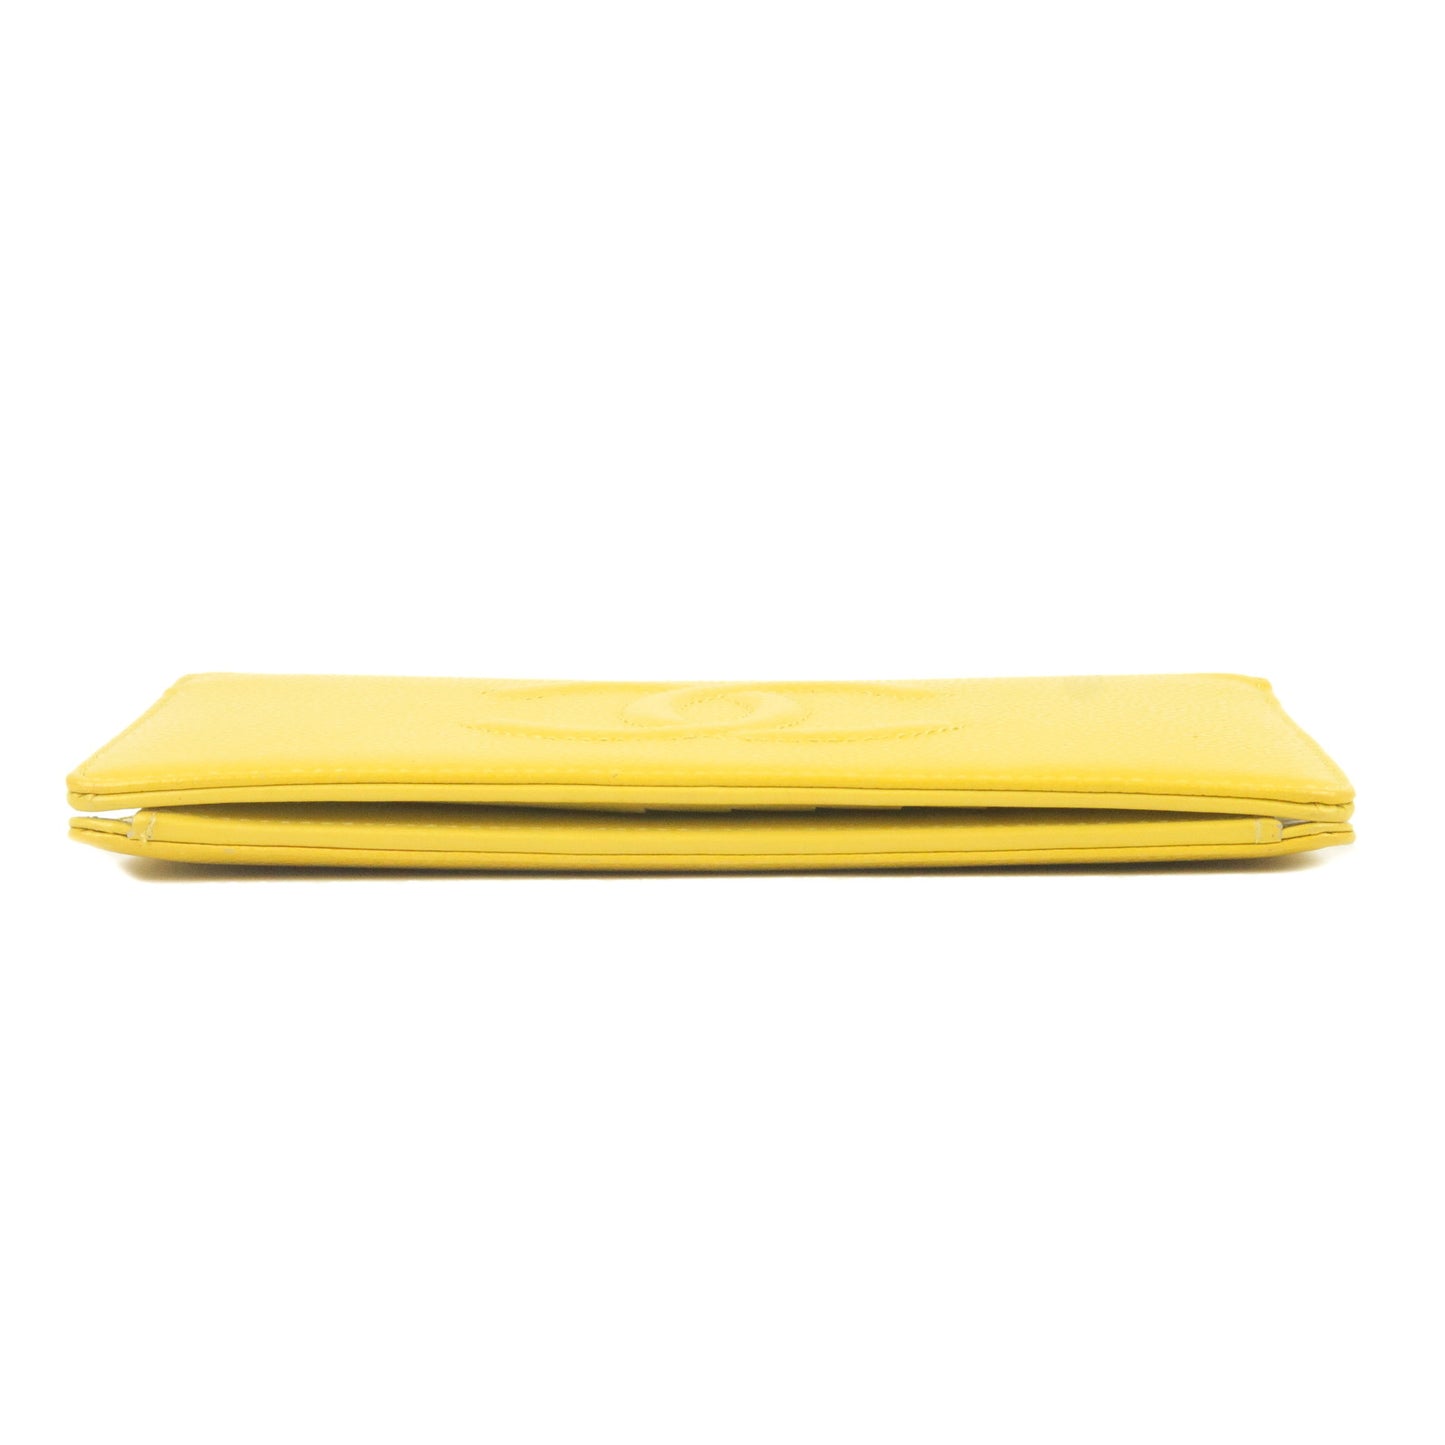 CHANEL Caviar Skin Bi-Fold Long Wallet Yellow A48651